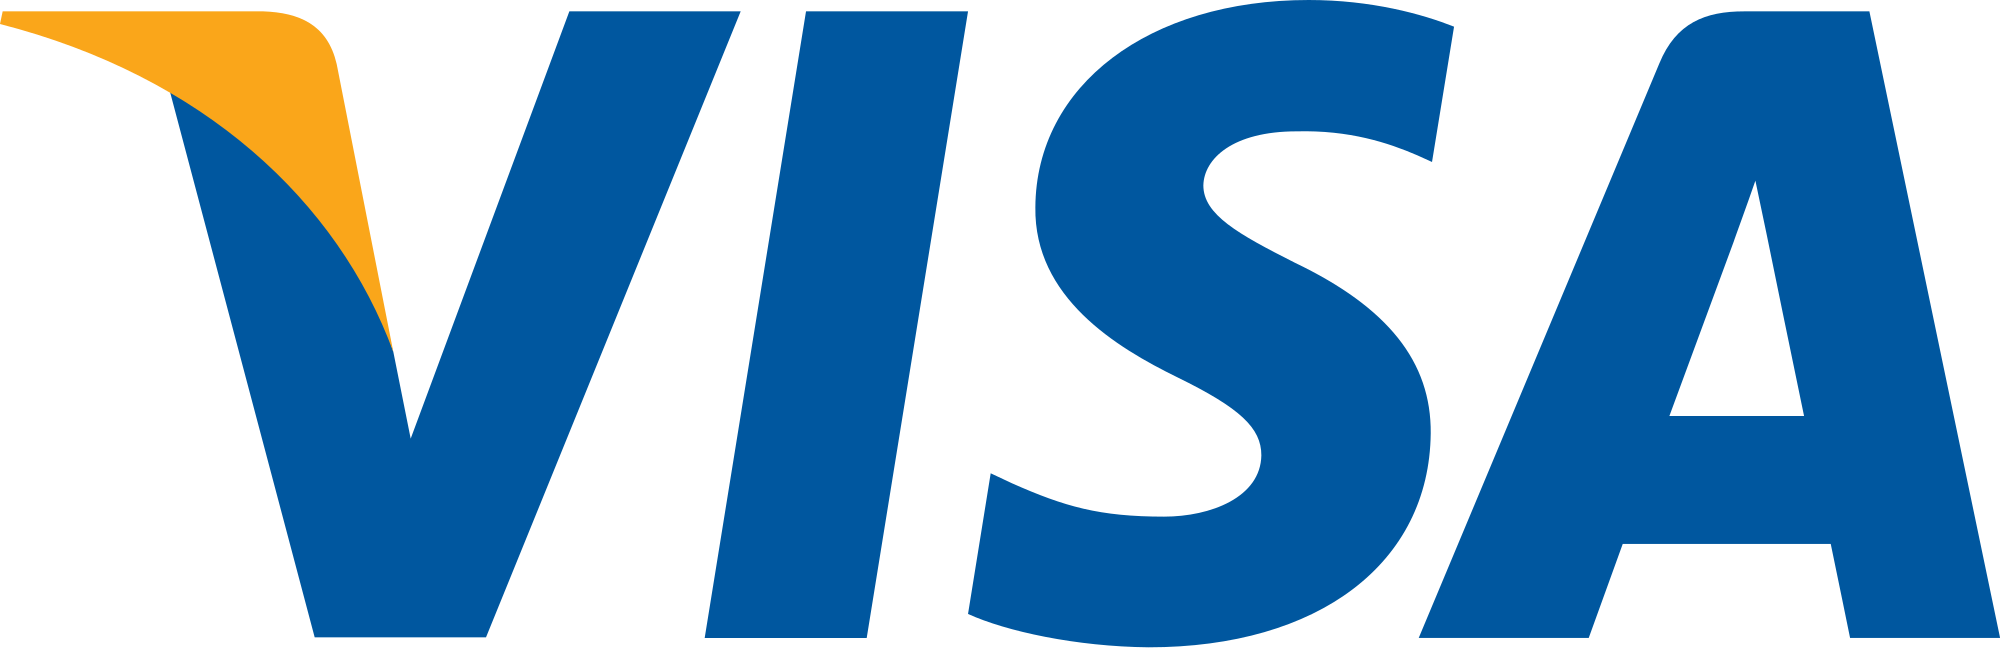 Visa-Logo.png